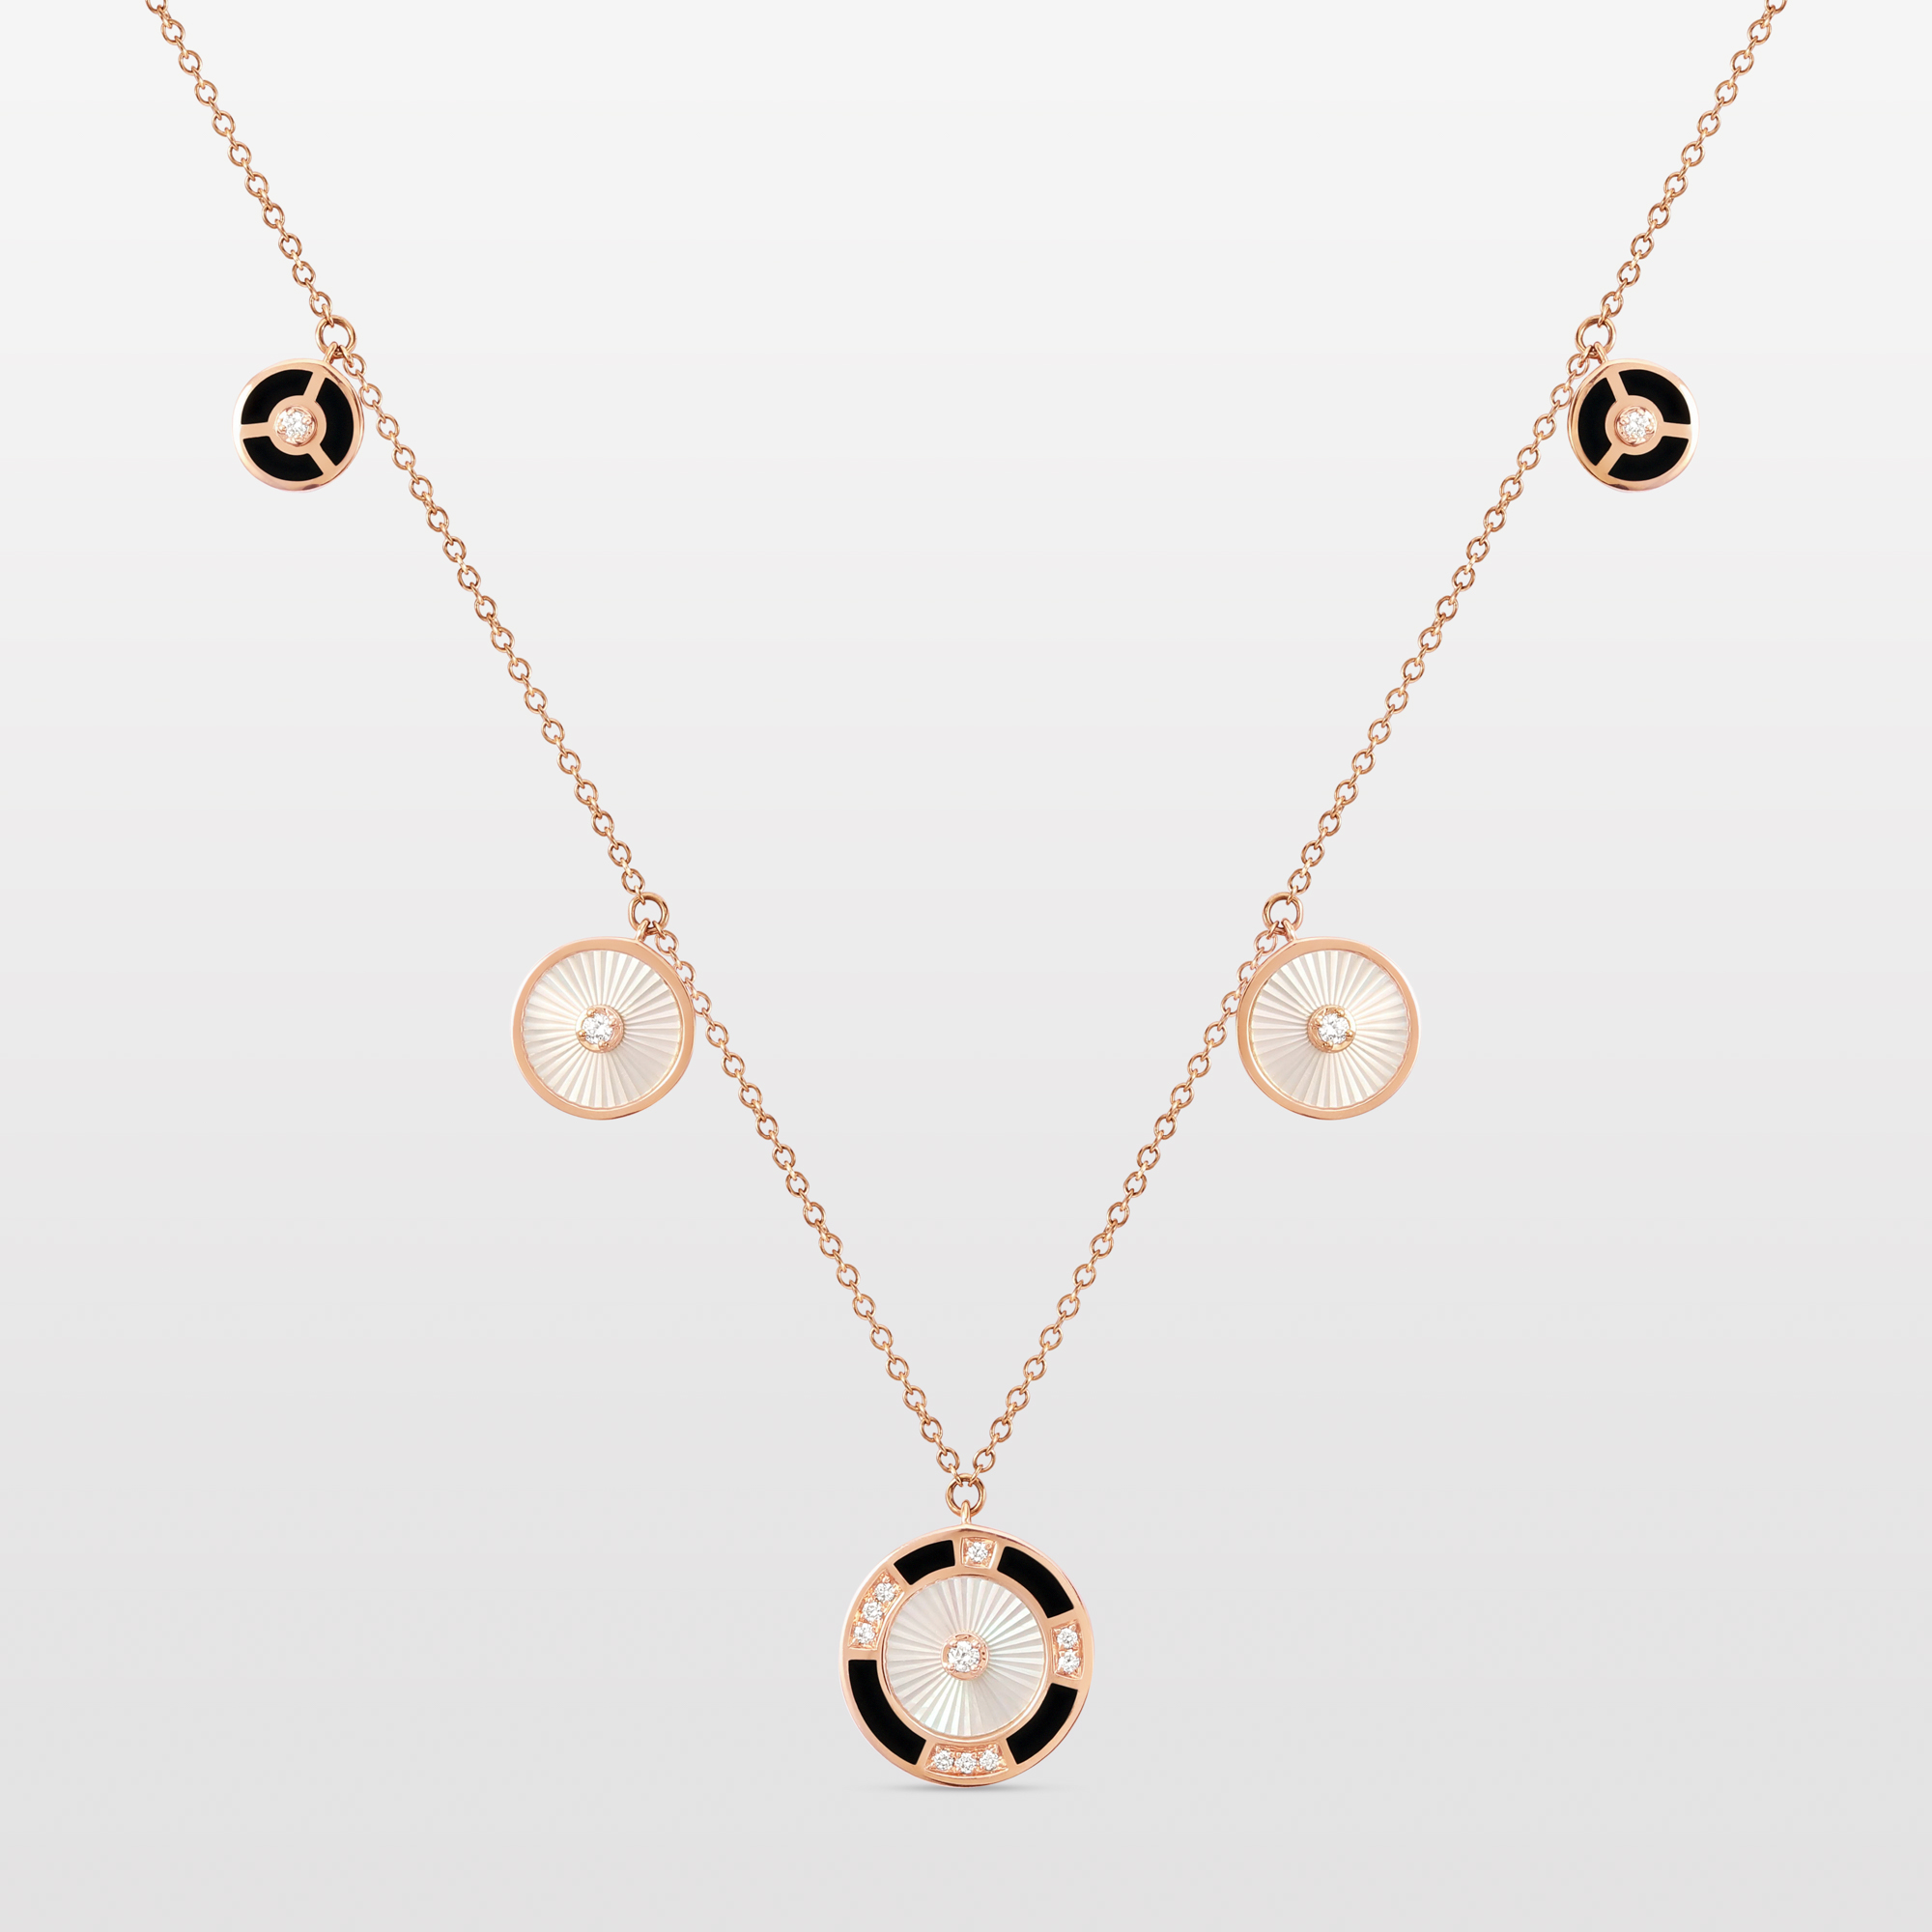 Moonlit Medallions Necklace